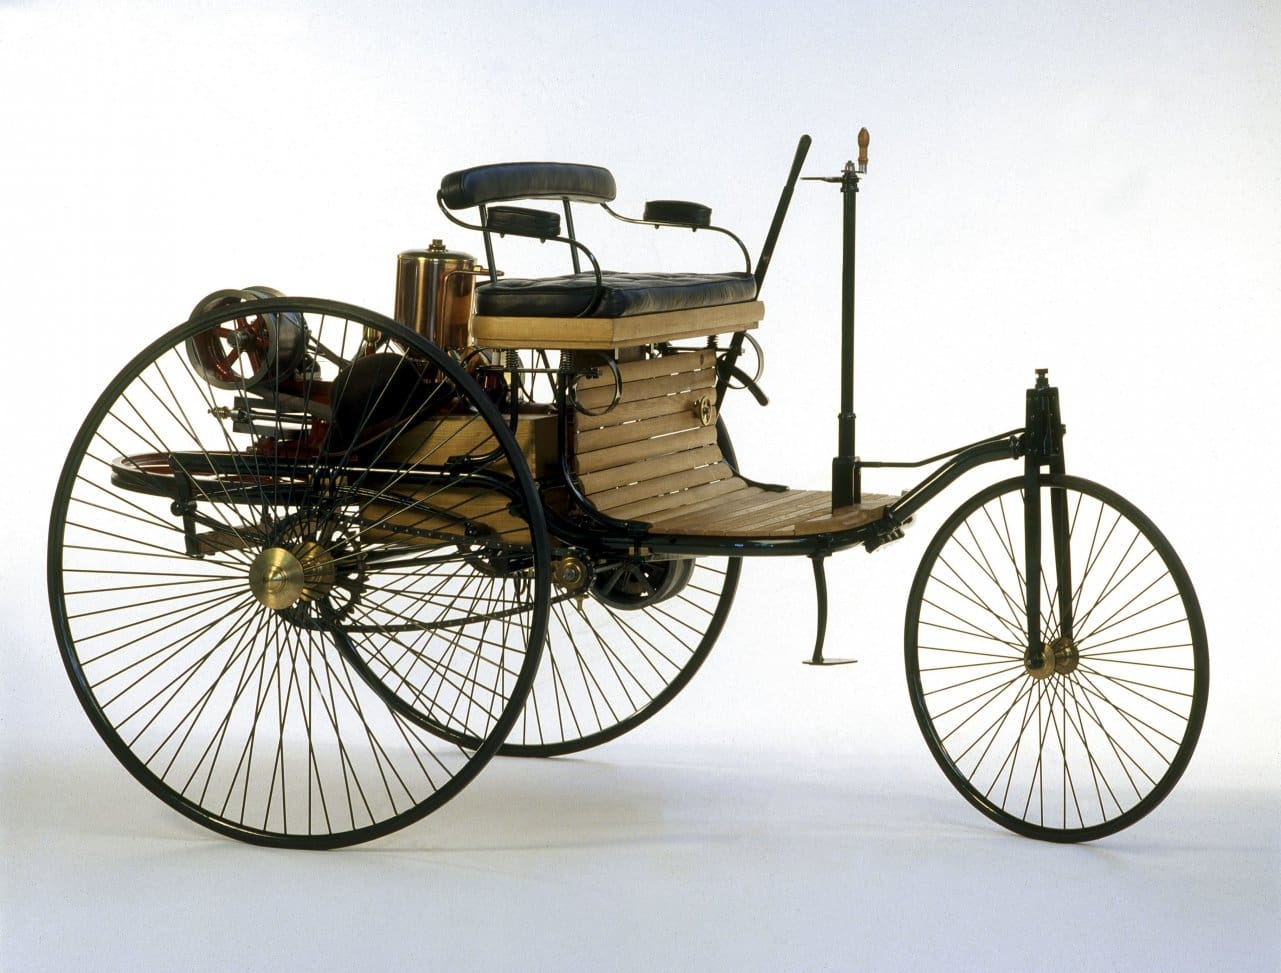 Karl Benz’s first car 